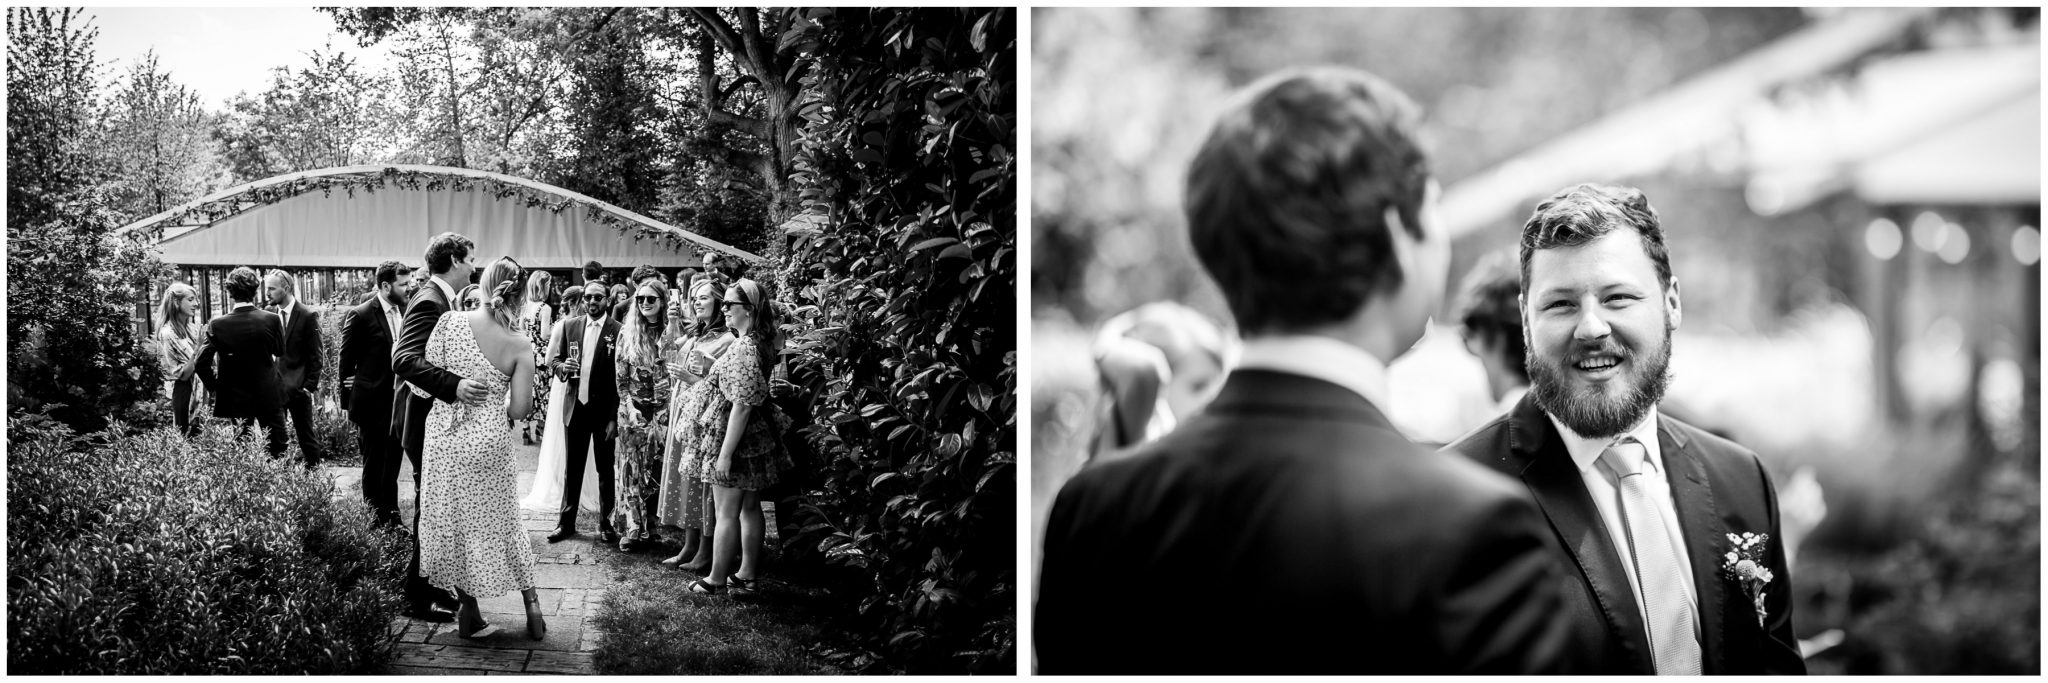 Documentary black and white wedding photograhy